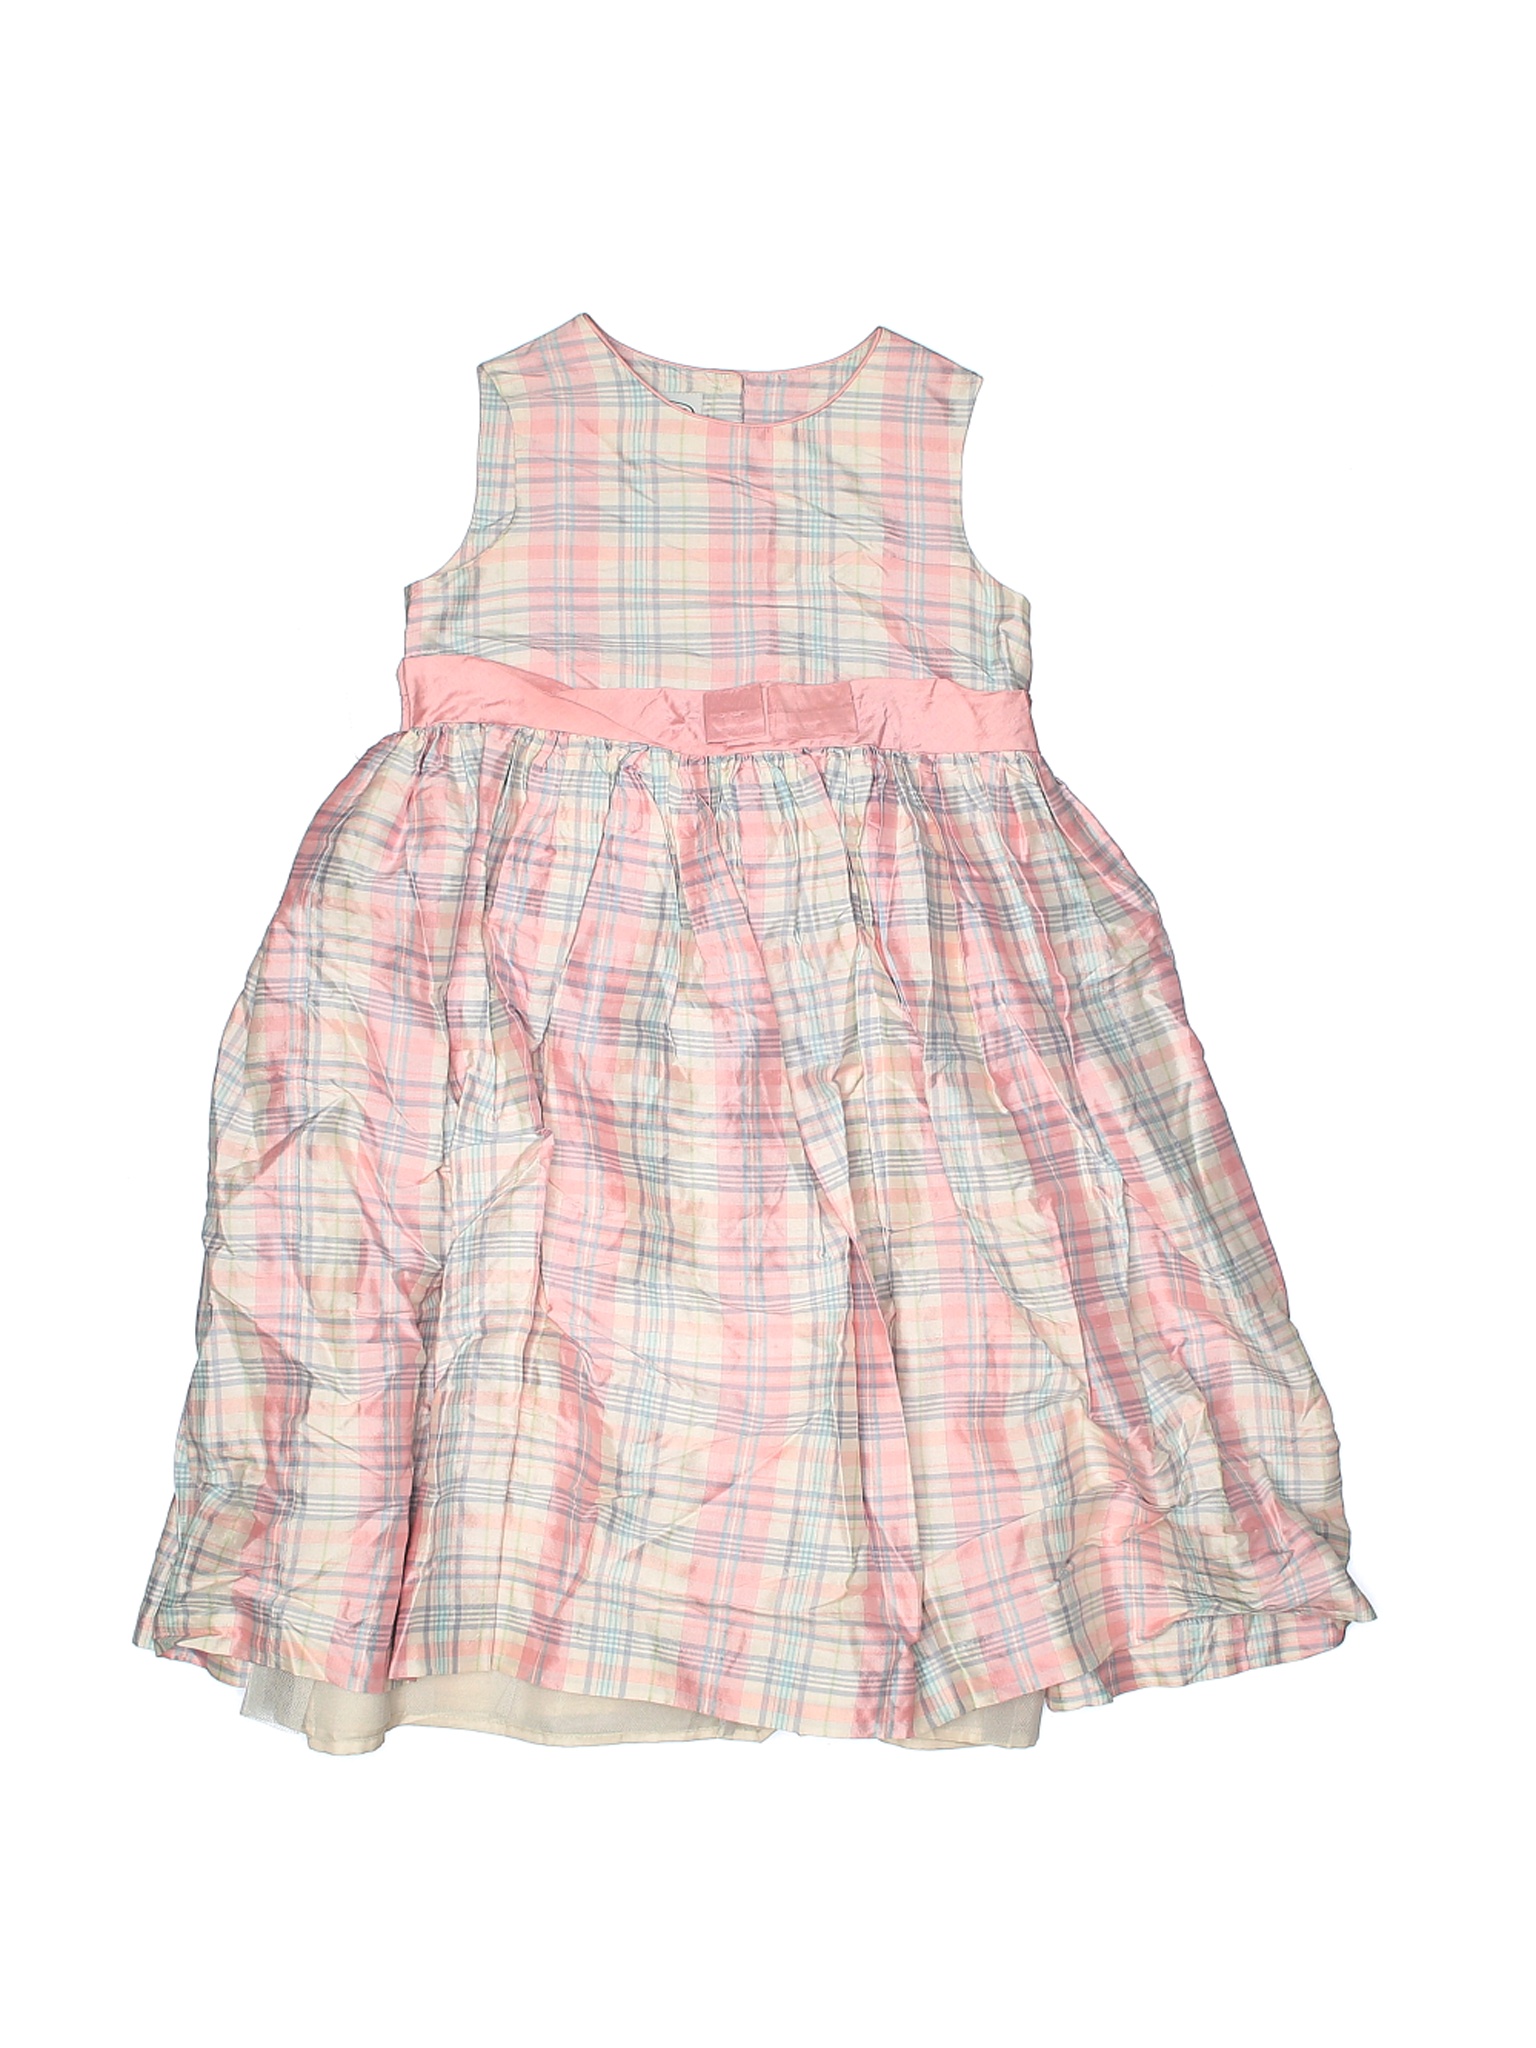 Talbots Kids Girls Pink Dress 16 | eBay